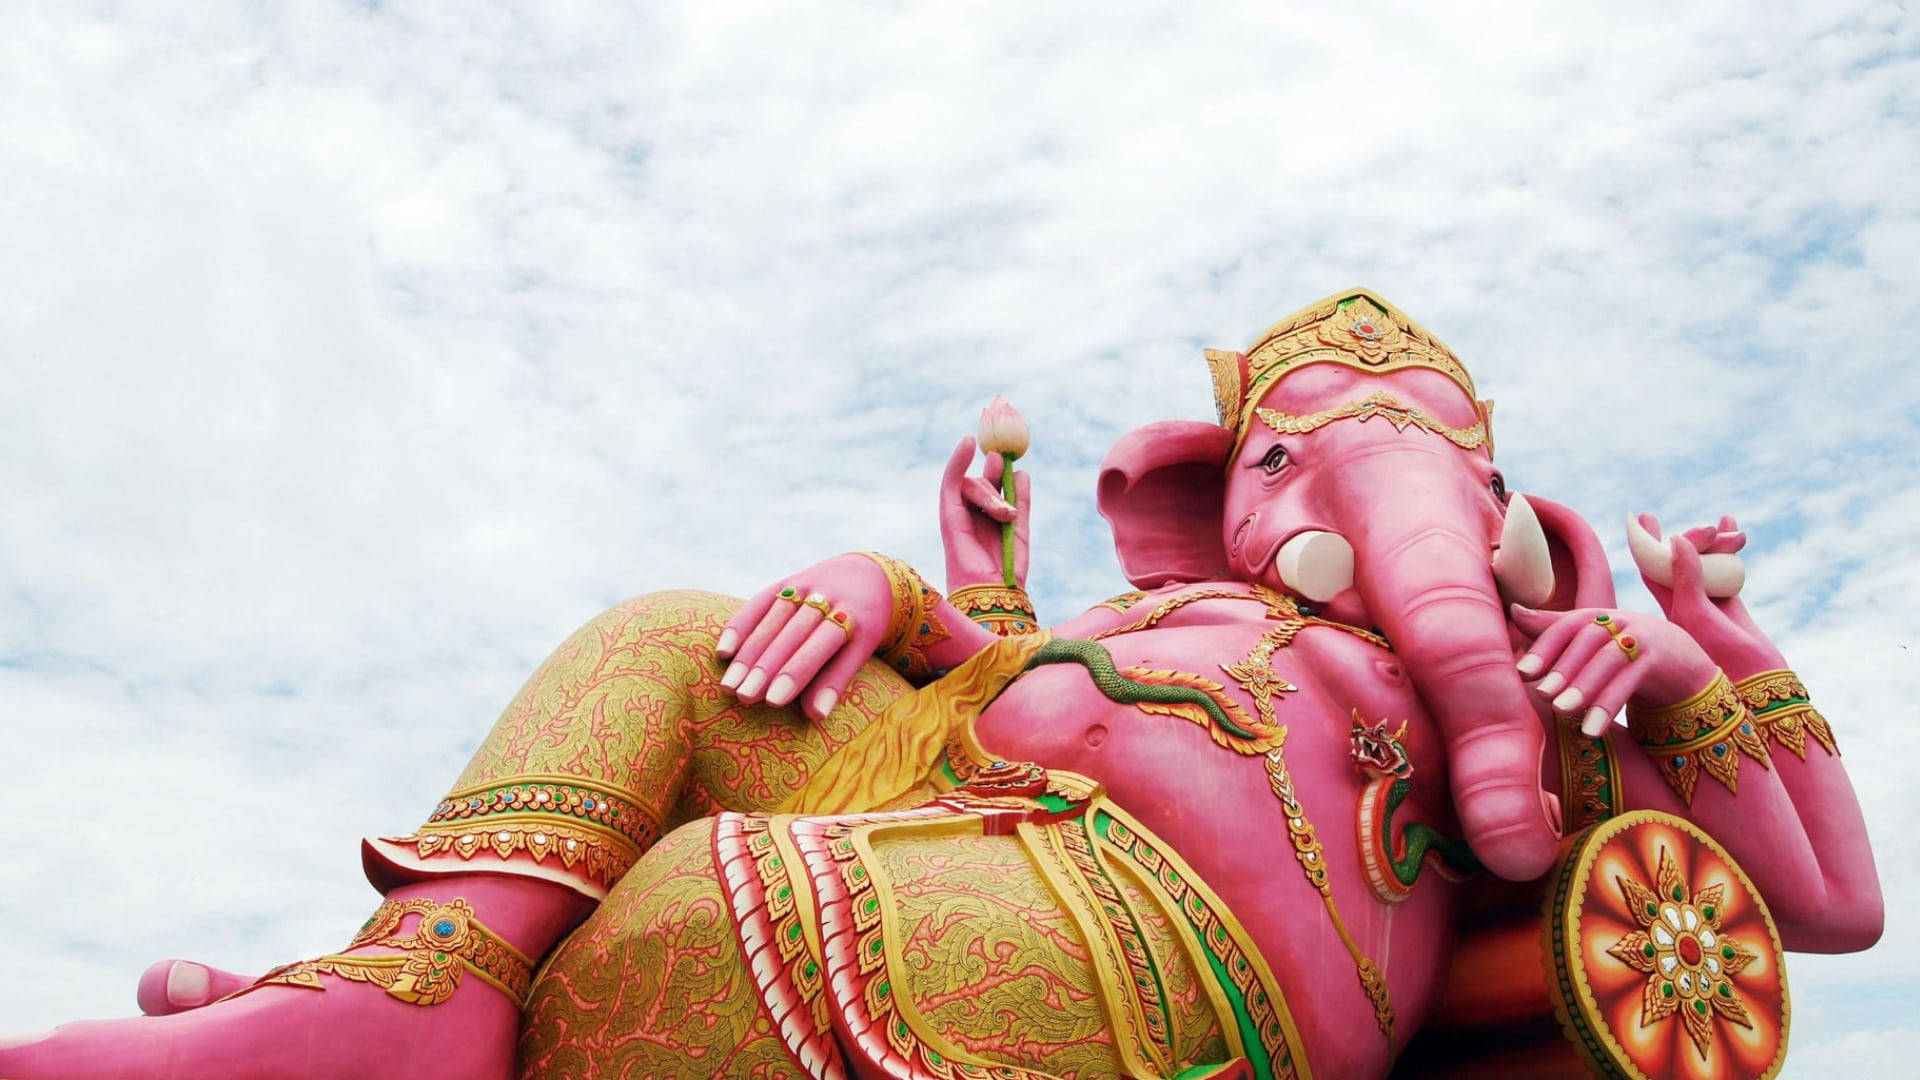 3,735 Cute Ganesha Images, Stock Photos & Vectors | Shutterstock